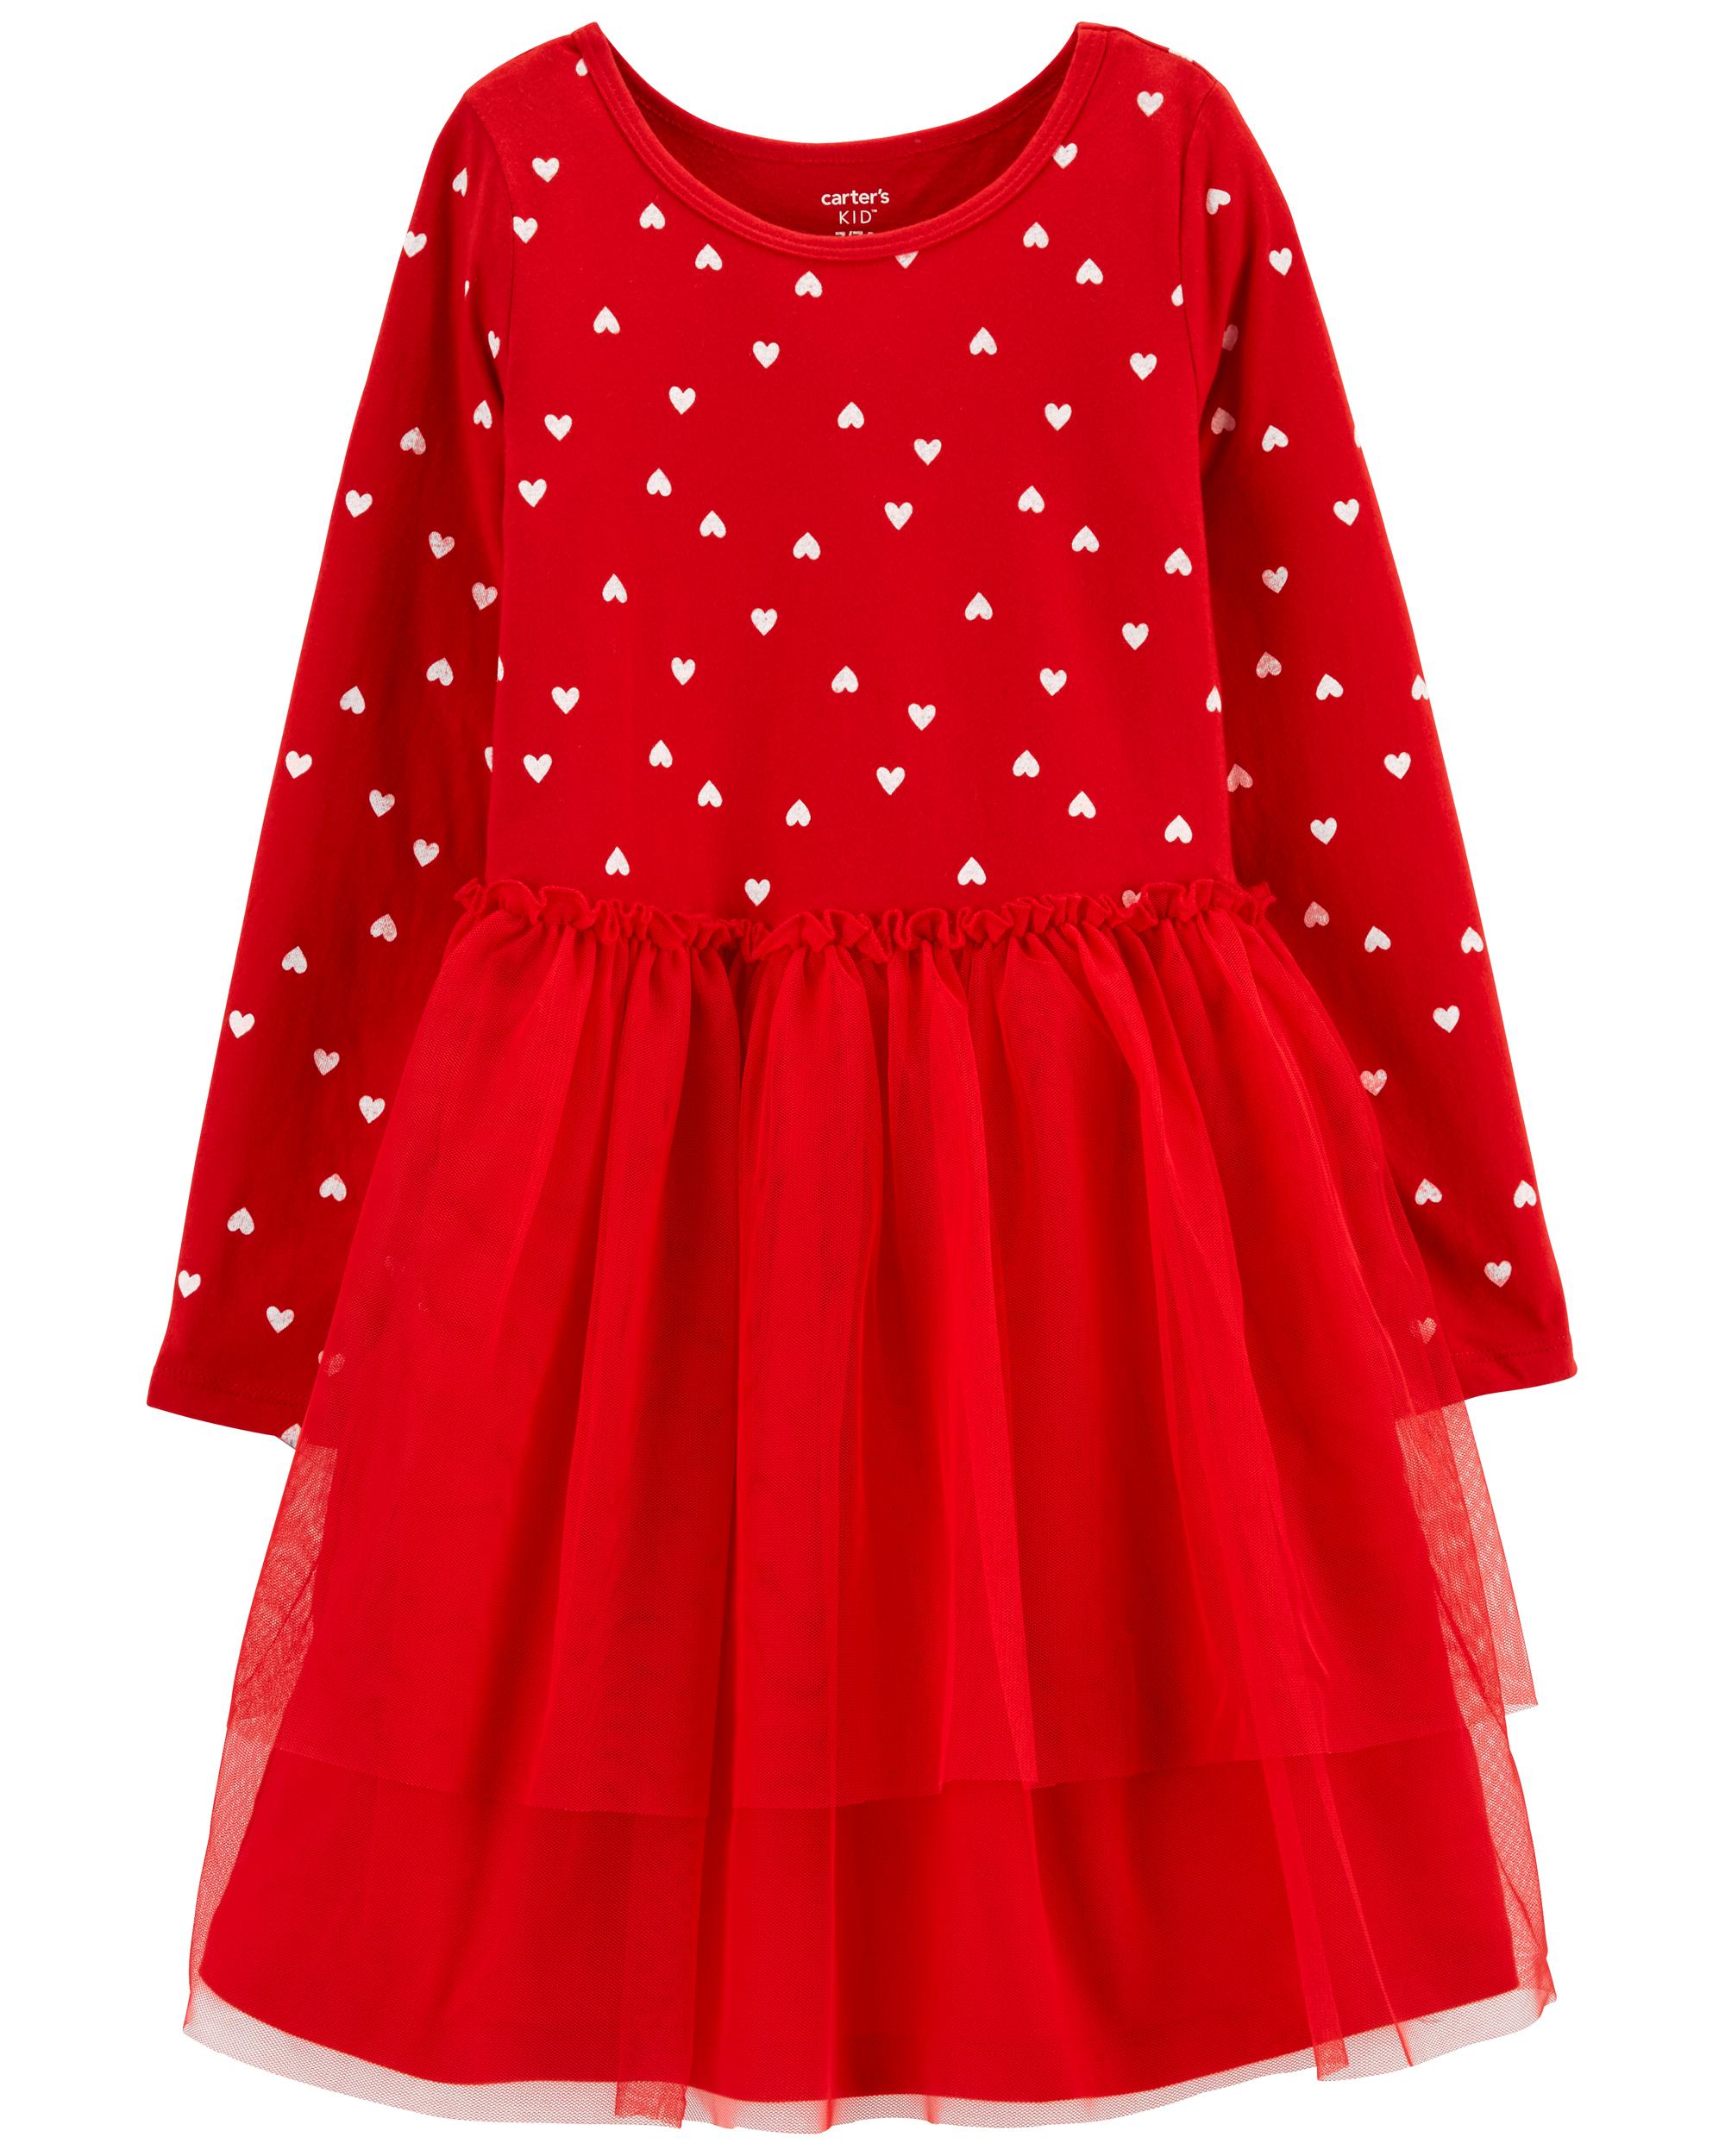 Kid Red Heart Tutu Dress | carters.com